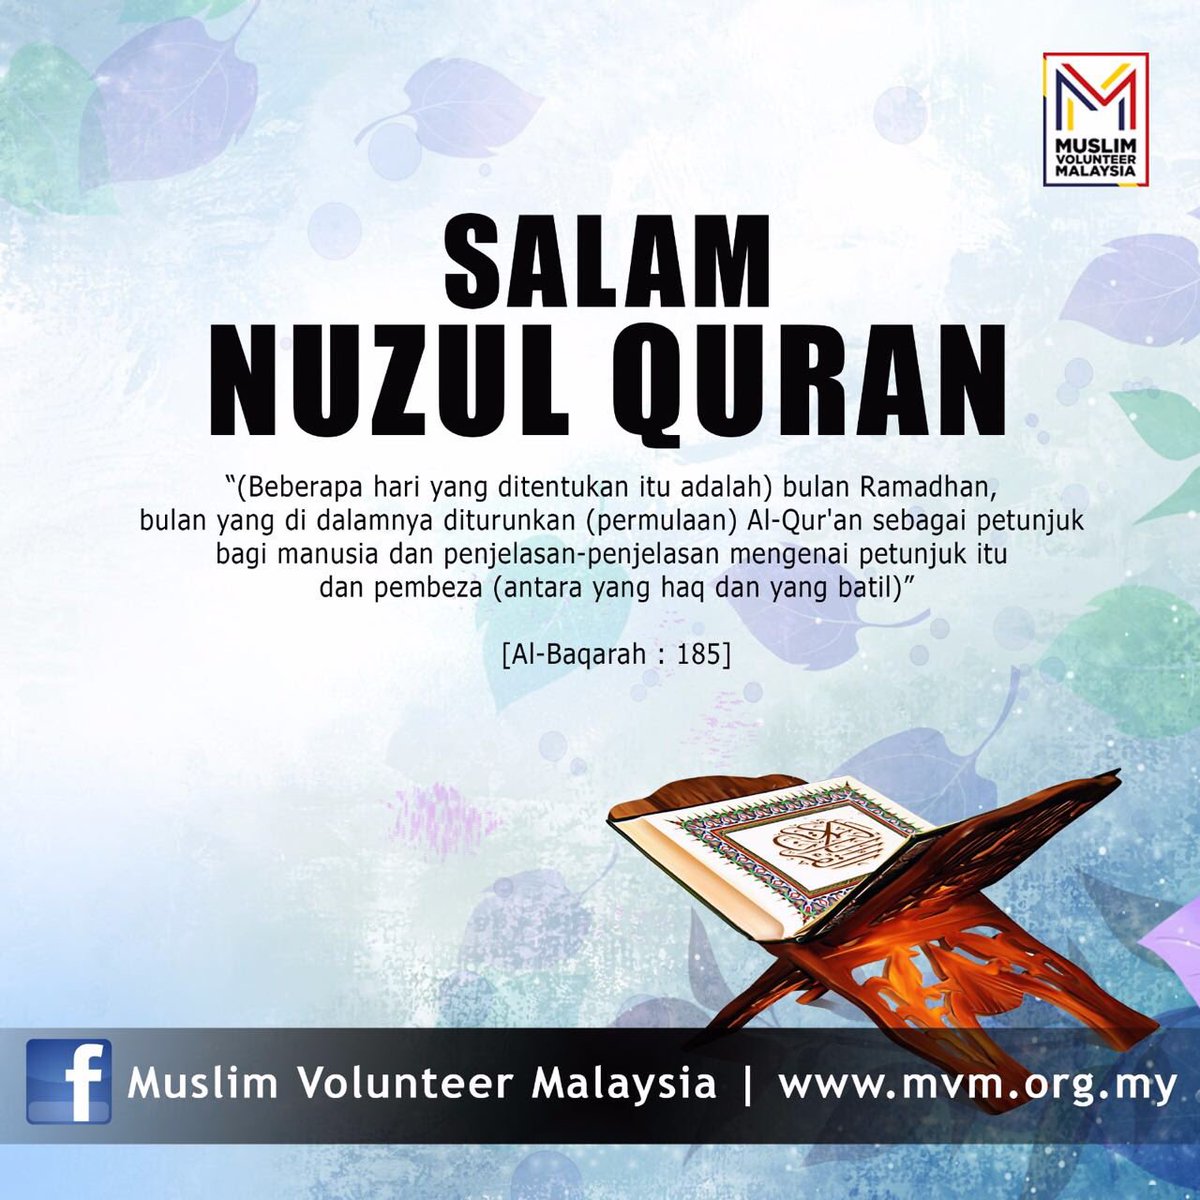 Muslim Volunteer Malaysia On Twitter Salam Nuzul Quran Dari Volunteermvm Nuzulquran Muslimvolunteermalaysia